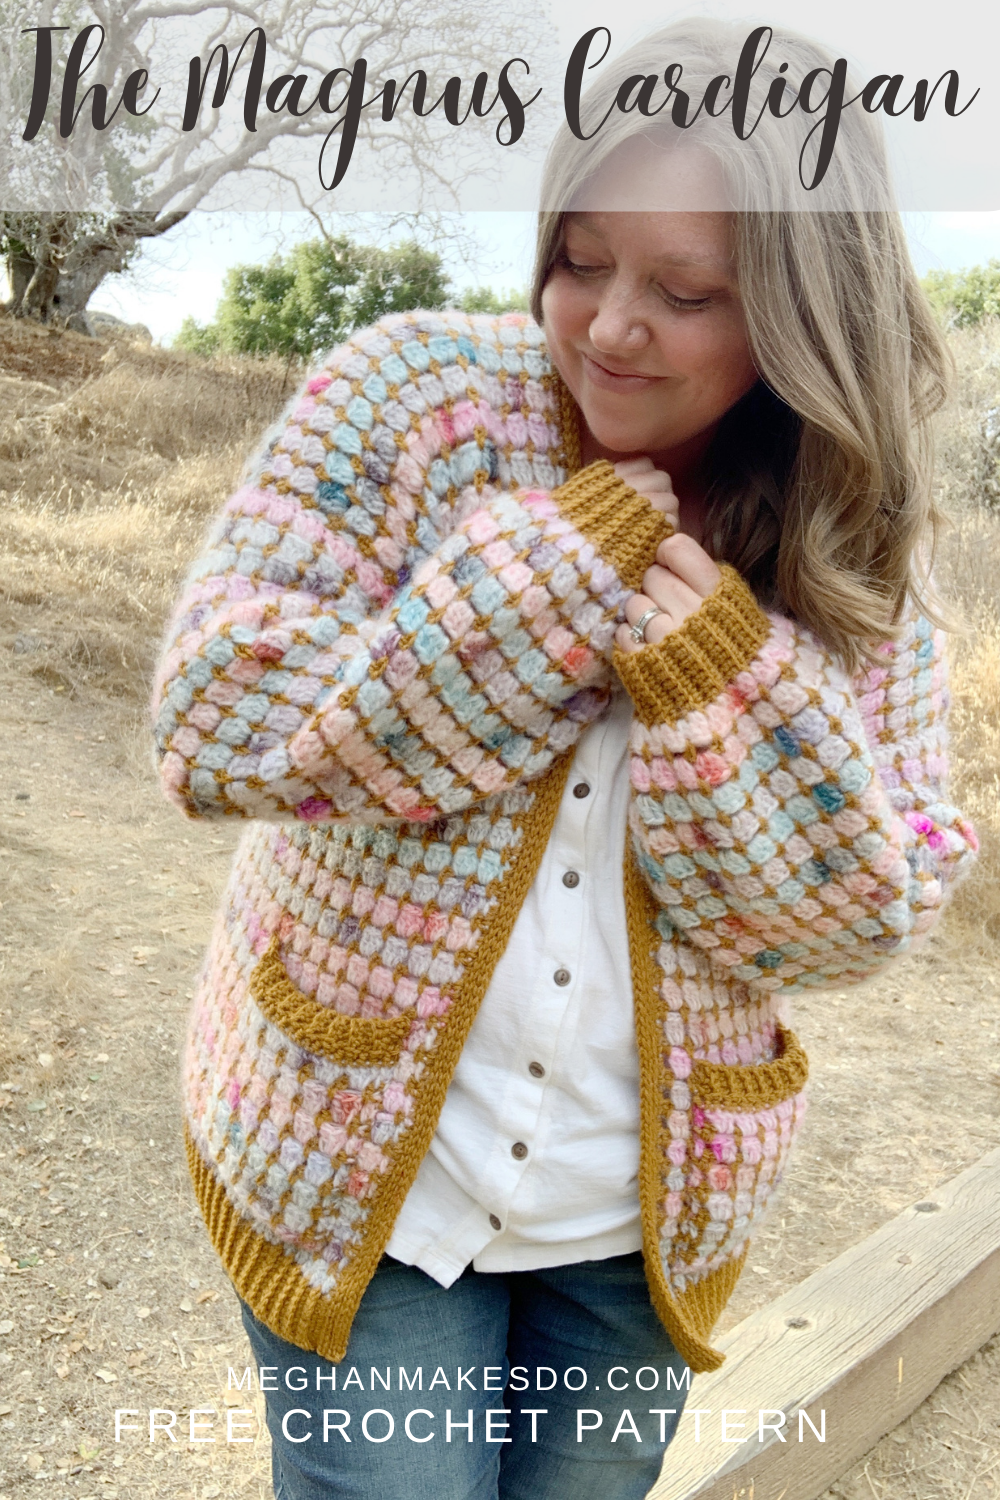 Yarn and Colors Maxi Cardigan Knitting Kit 